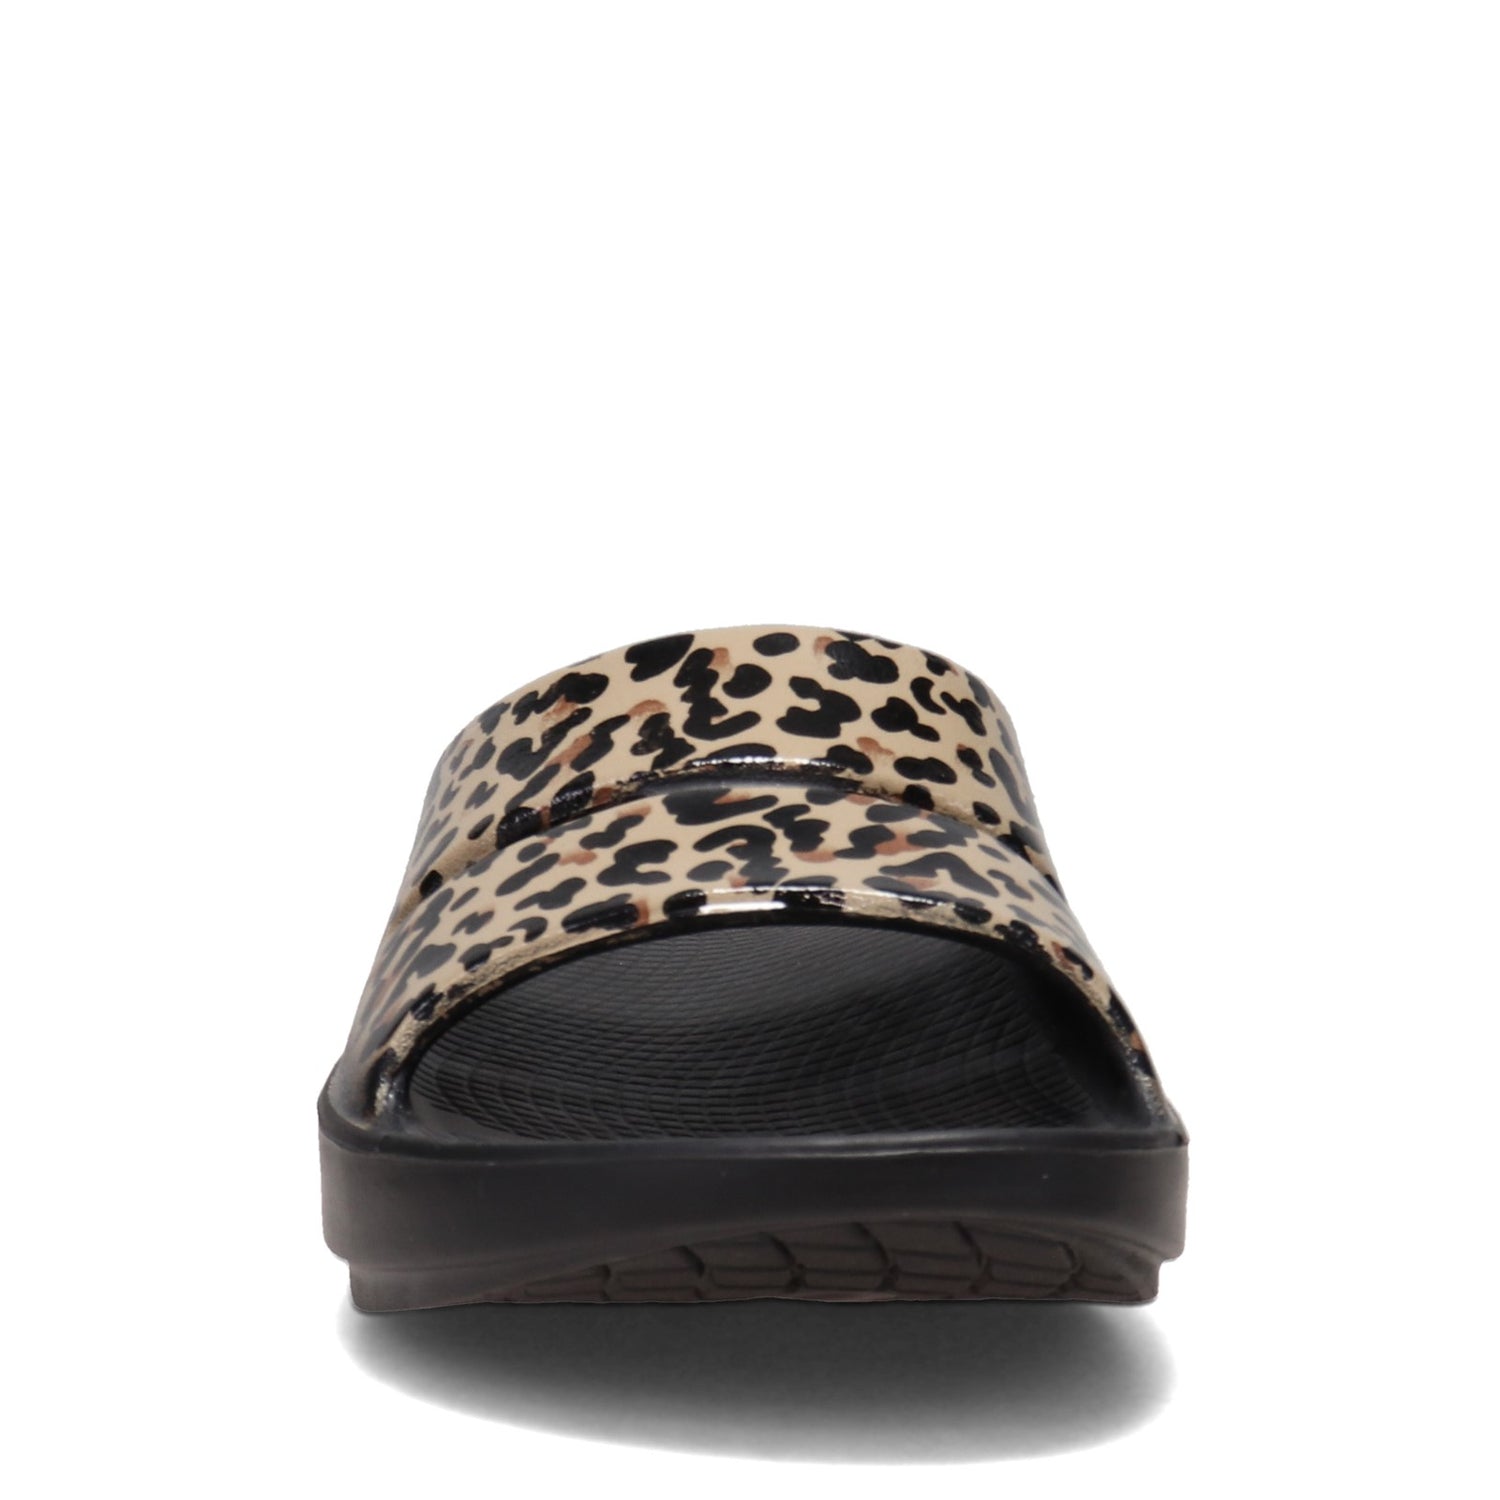 Peltz Shoes  Women's Oofos OOahh Luxe Slide Sandal BLACK / LEOPARD 1103-BLKLEO